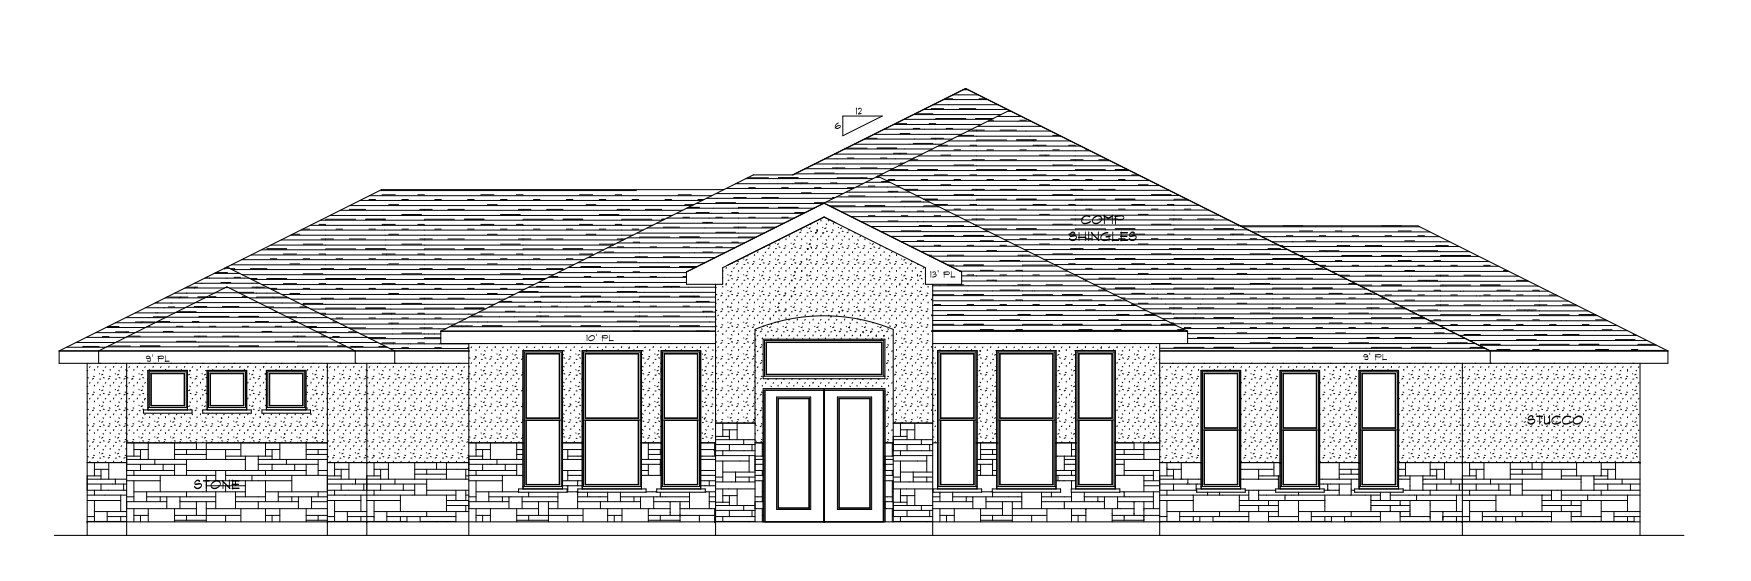 home plans | dream home builders | temple, belton, kileen TX